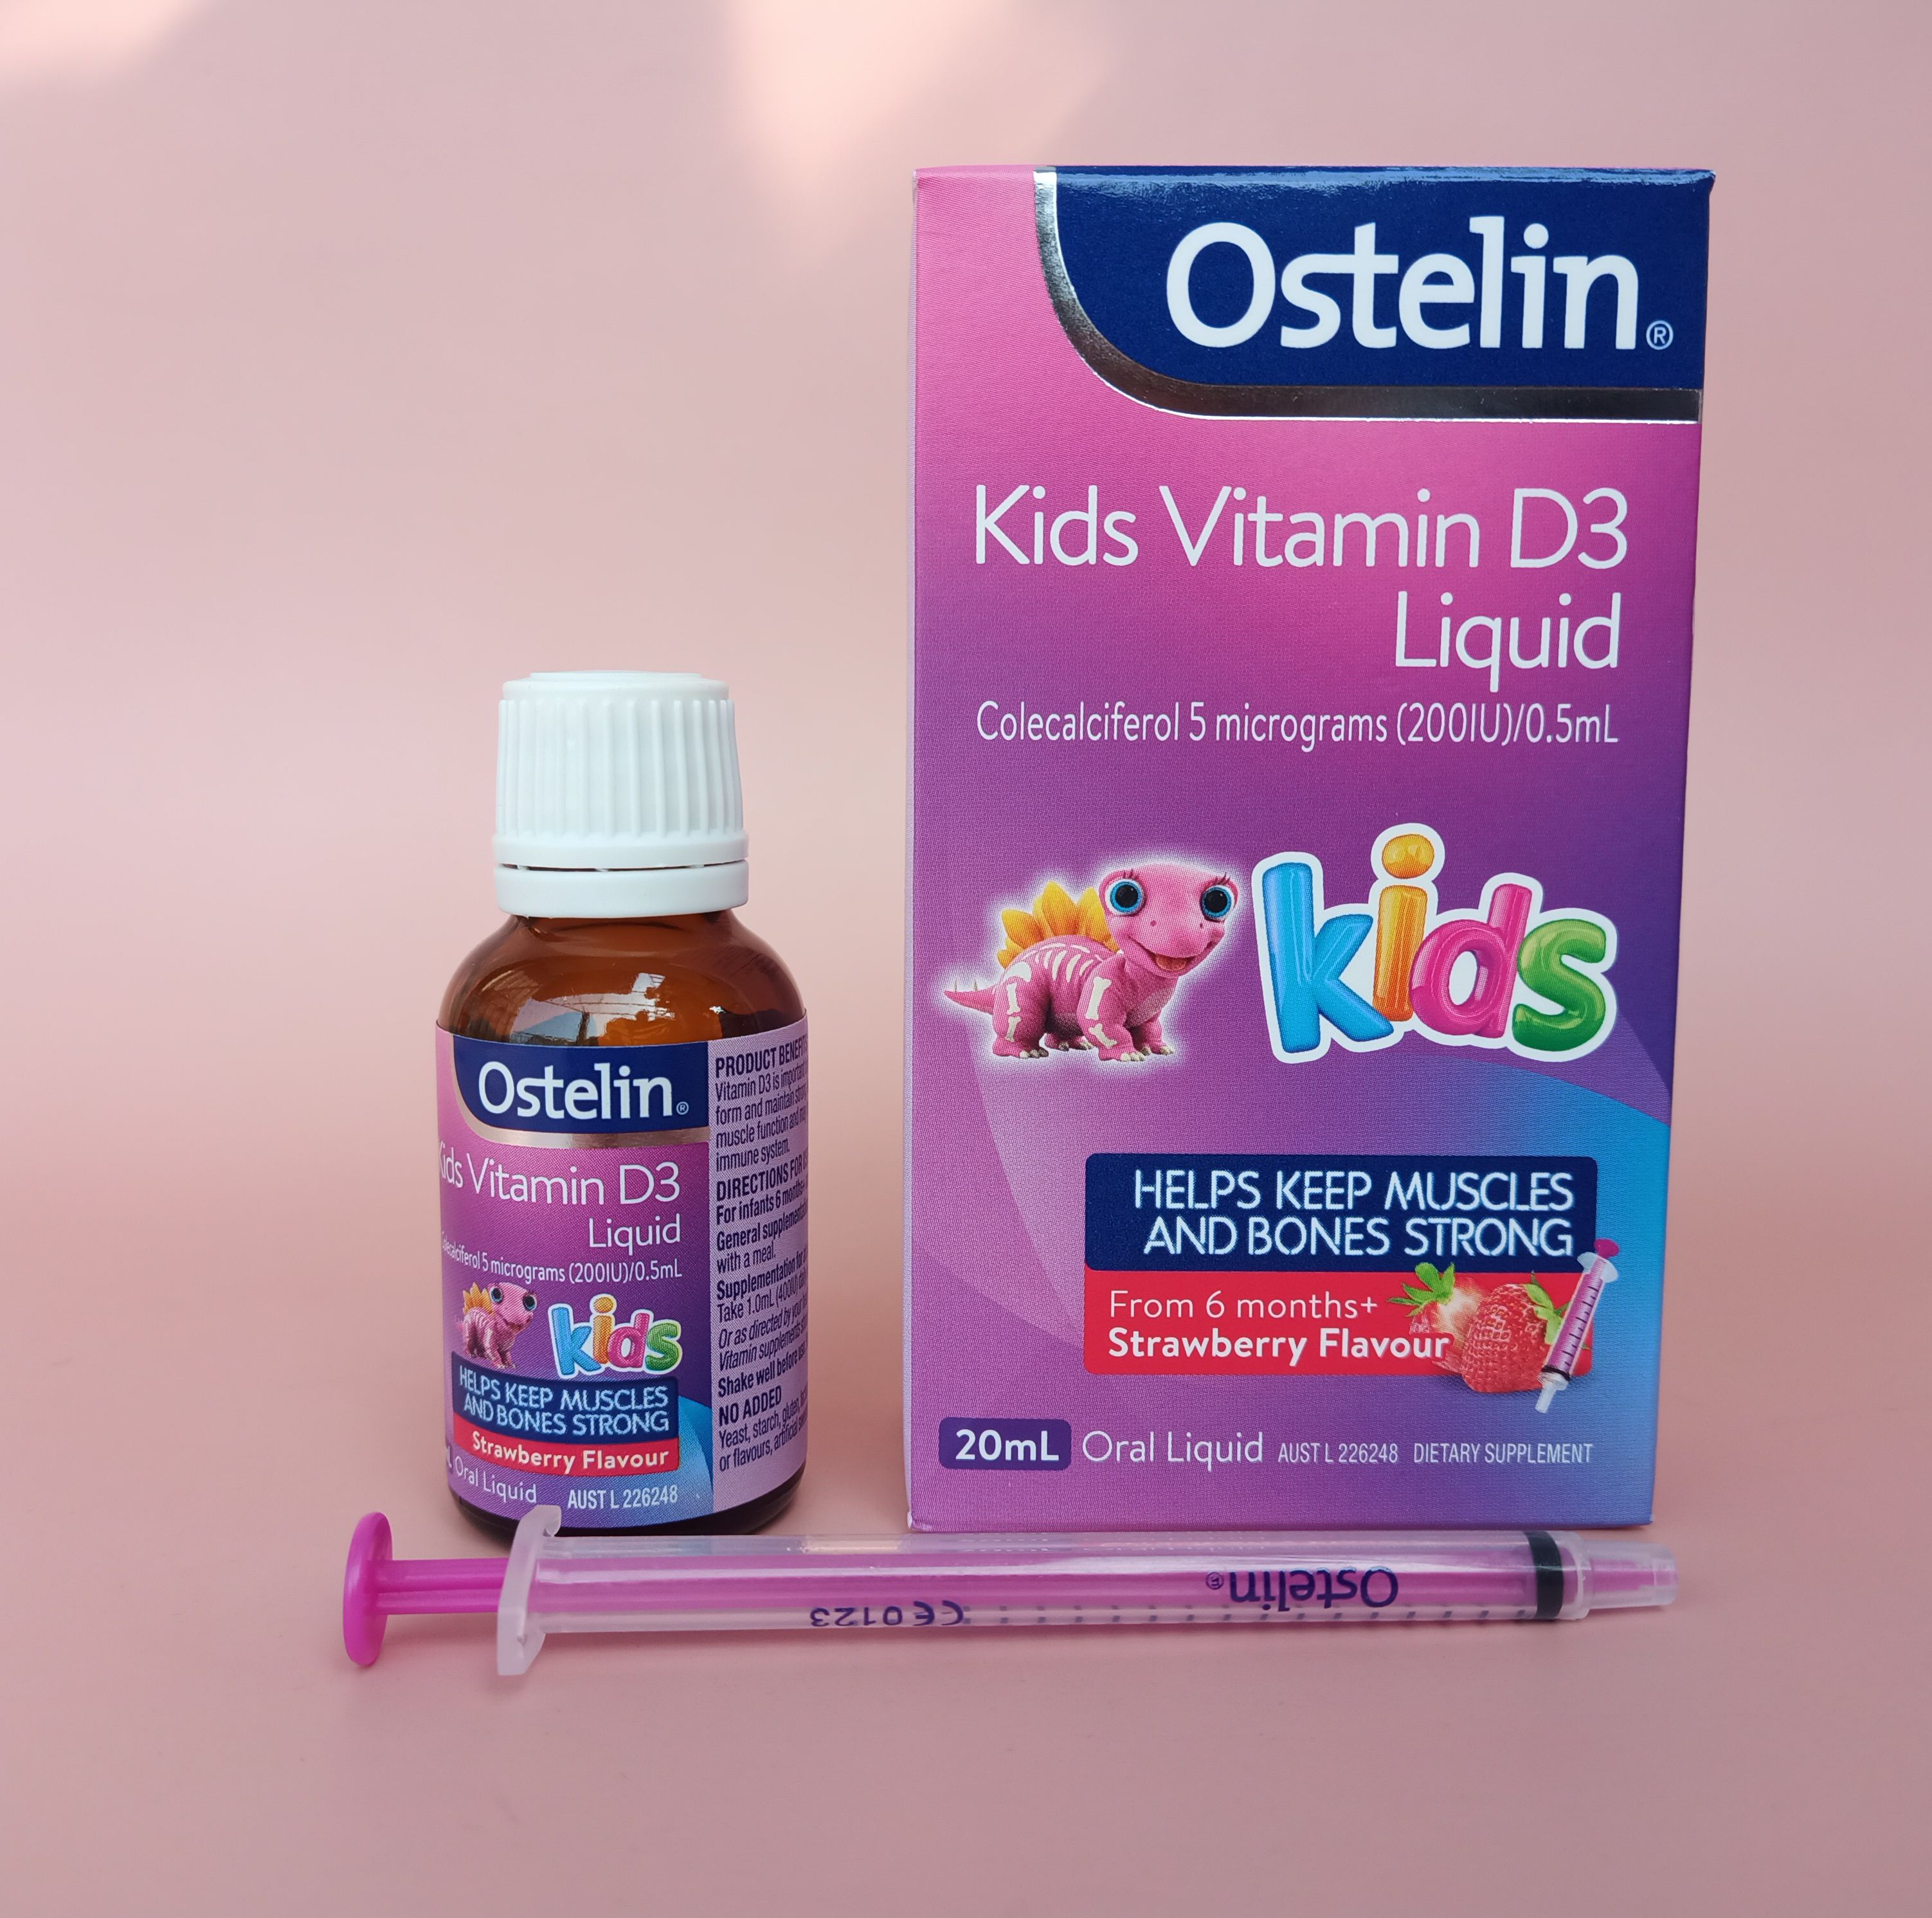 Osstelin Kids Vitamin D3 Liquid